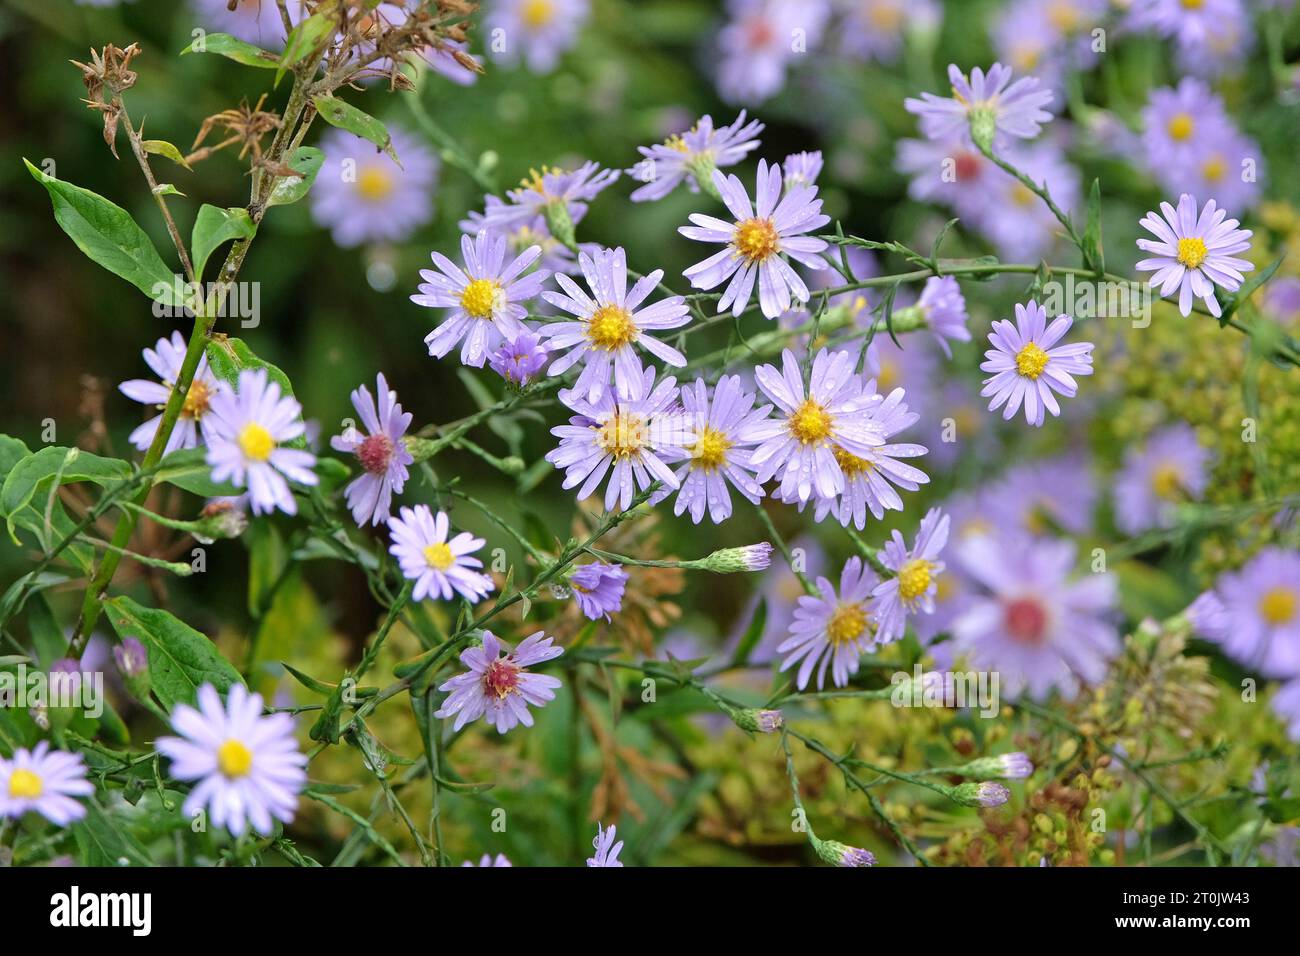 Symphyotrichum turbinellum, also known as a purple prairie aster, in flower. Stock Photo